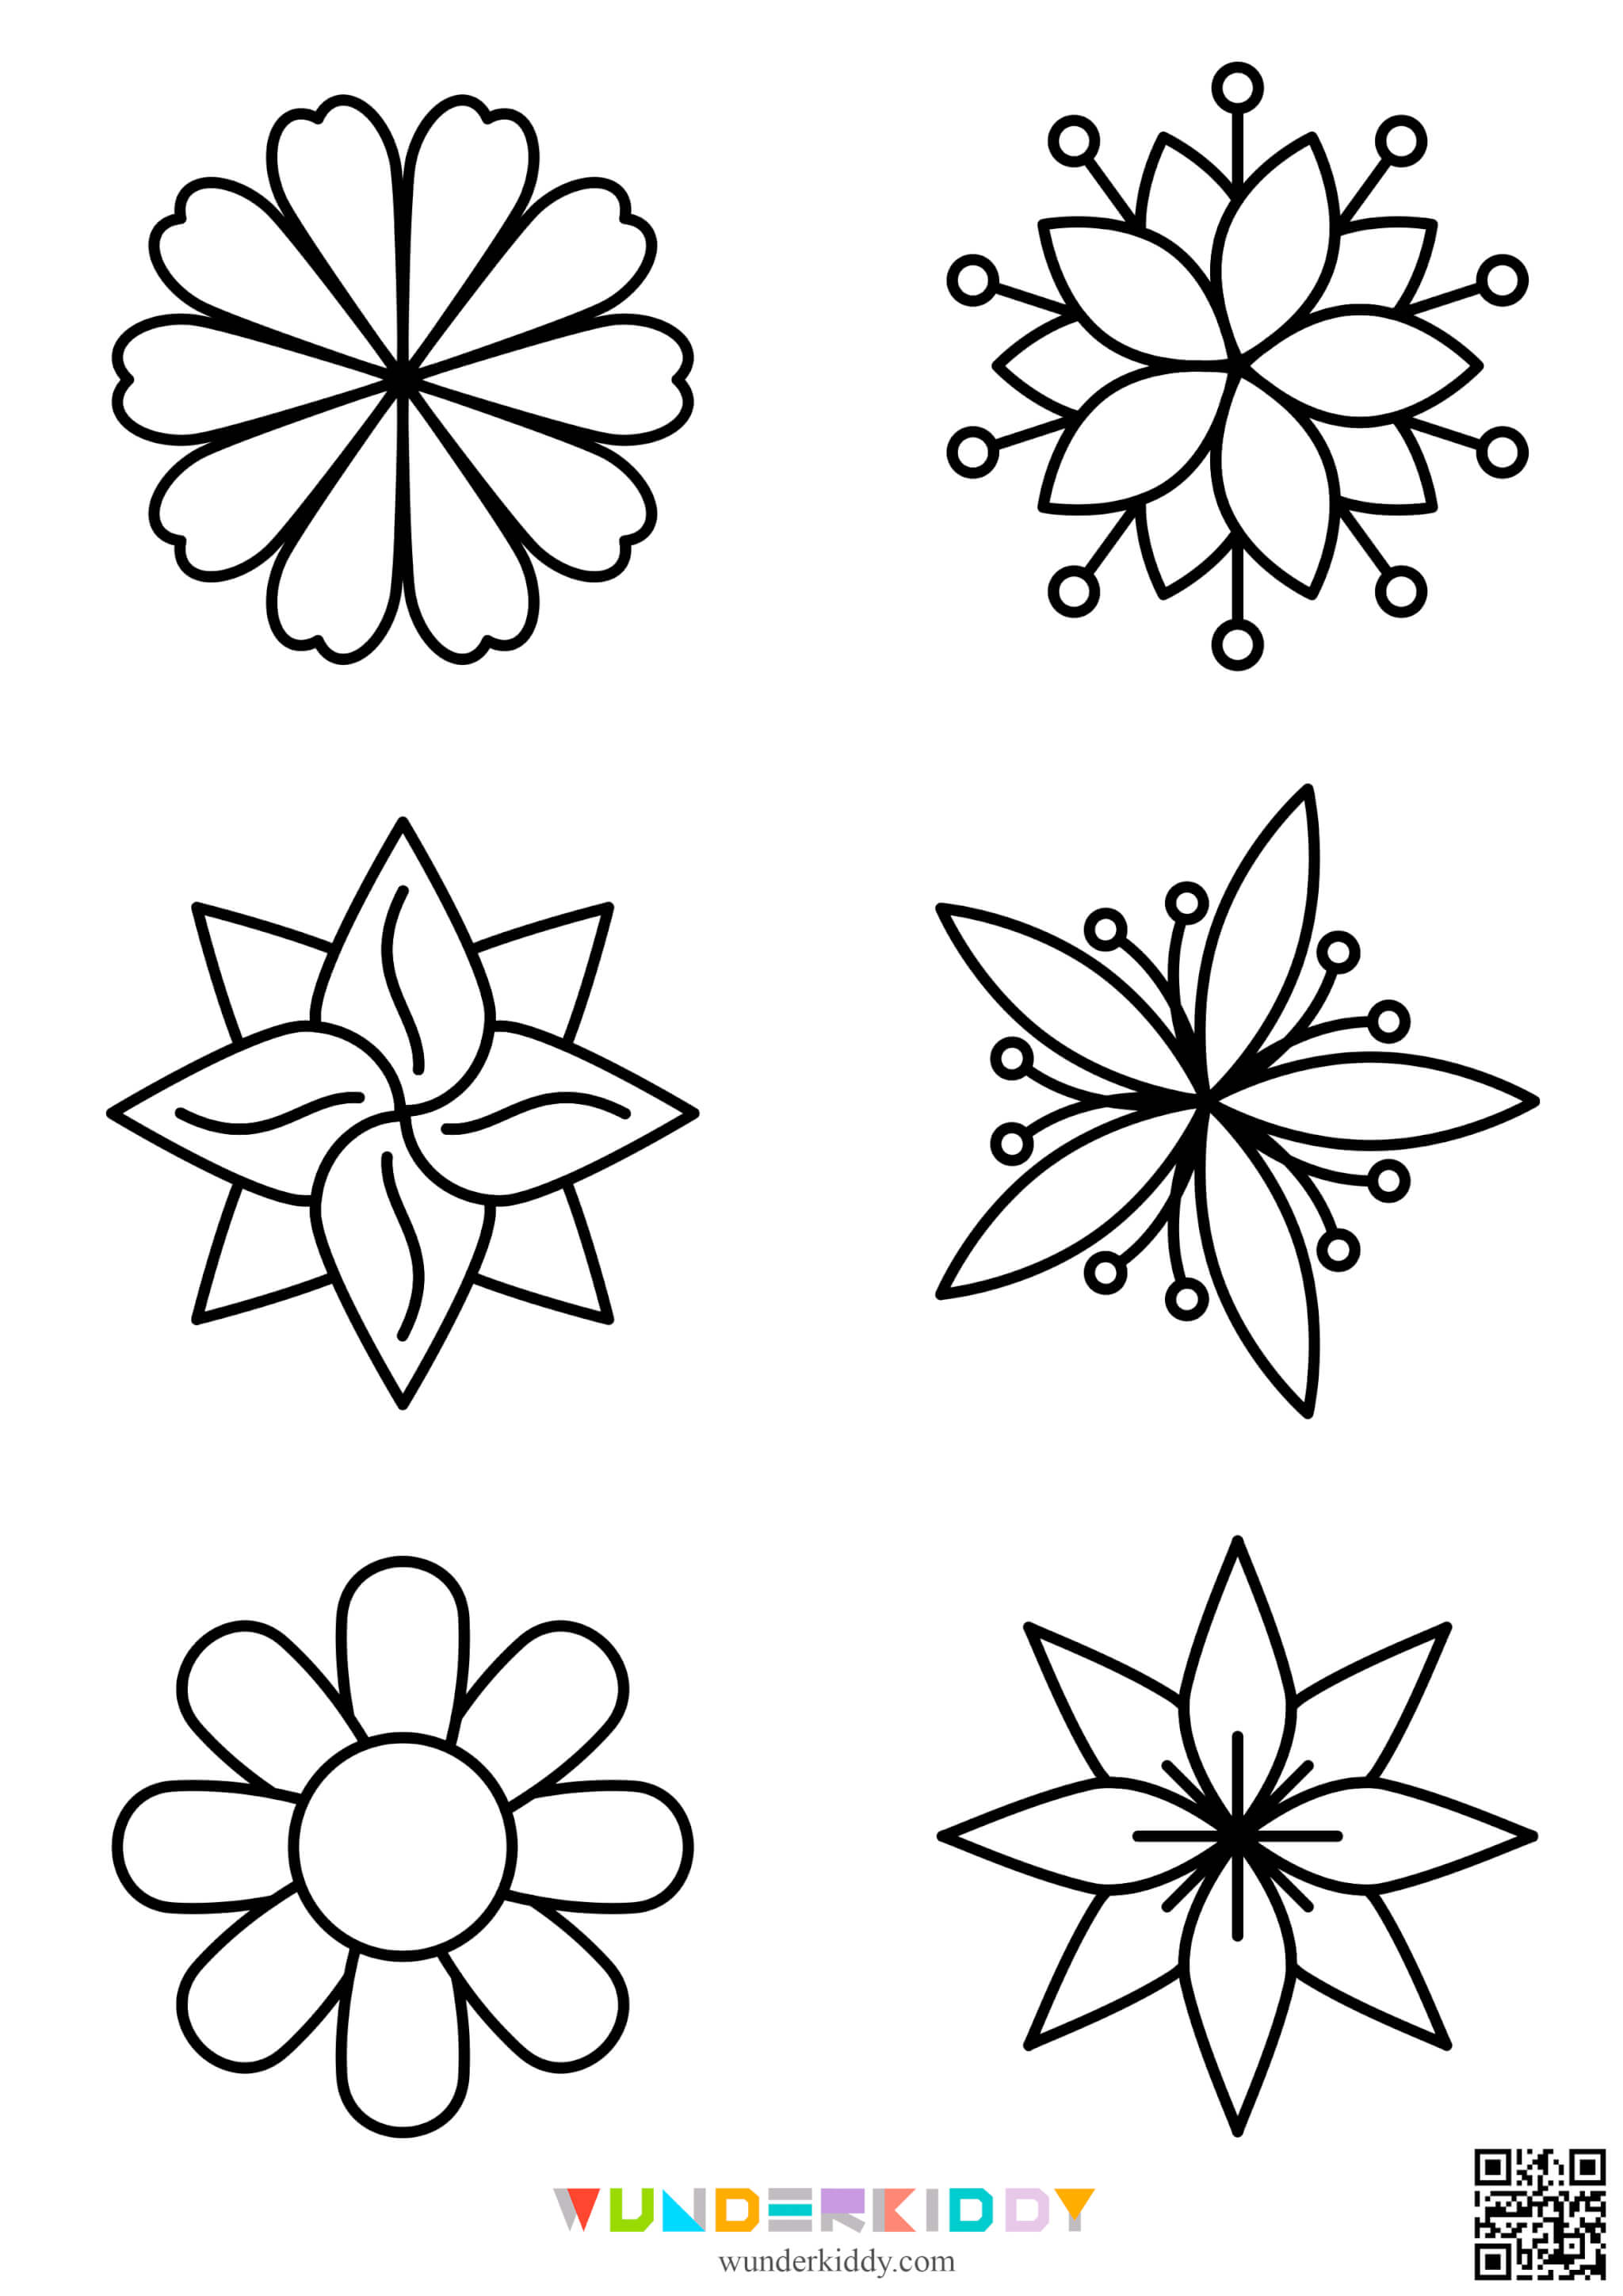 Simple Flower Templates - Image 3